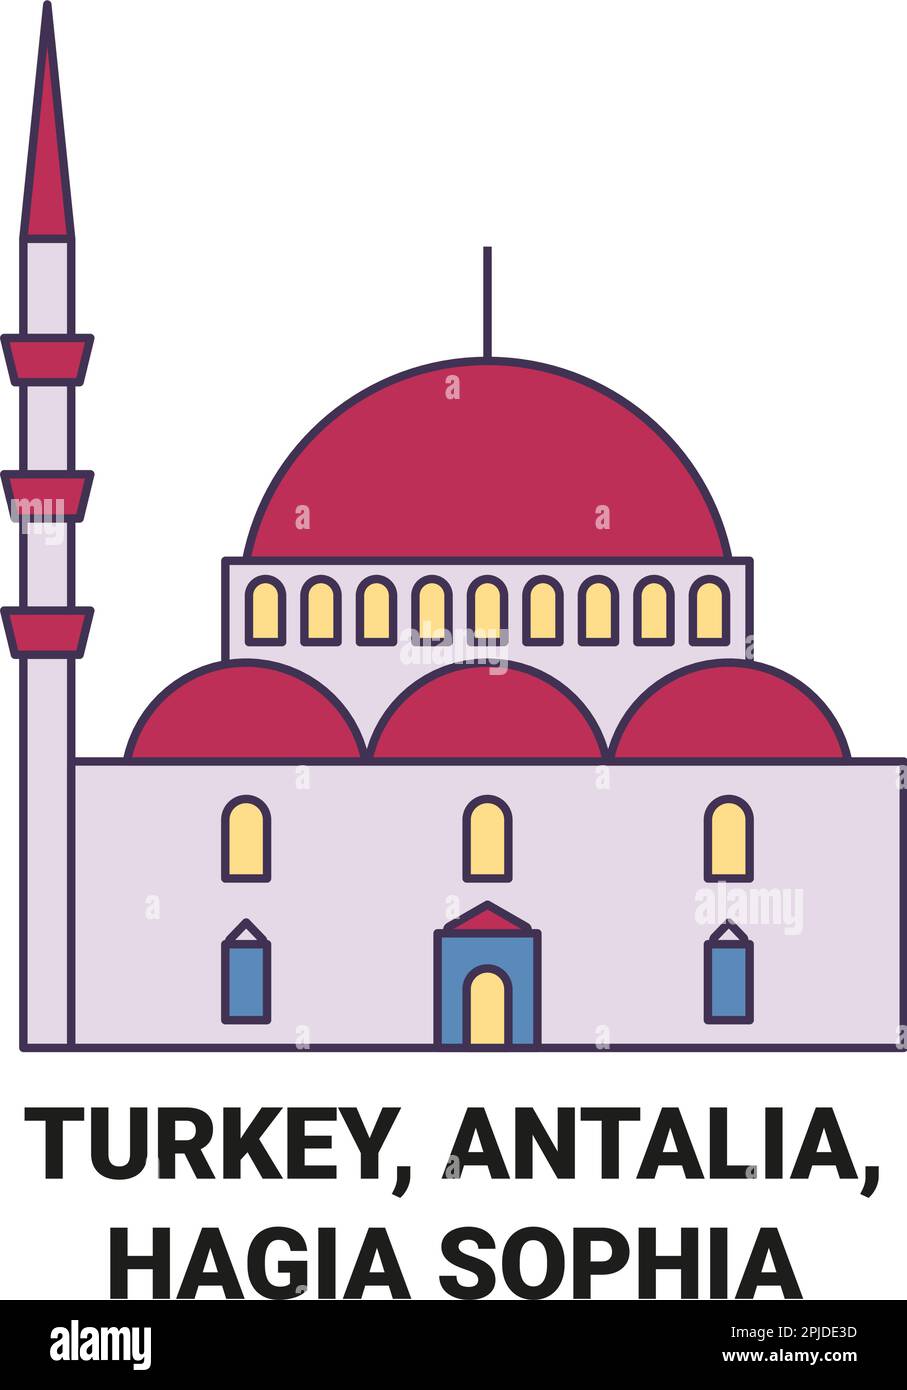 Truthahn, Antalia, Hagia Sophia Reise-Wahrzeichen-Vektordarstellung Stock Vektor